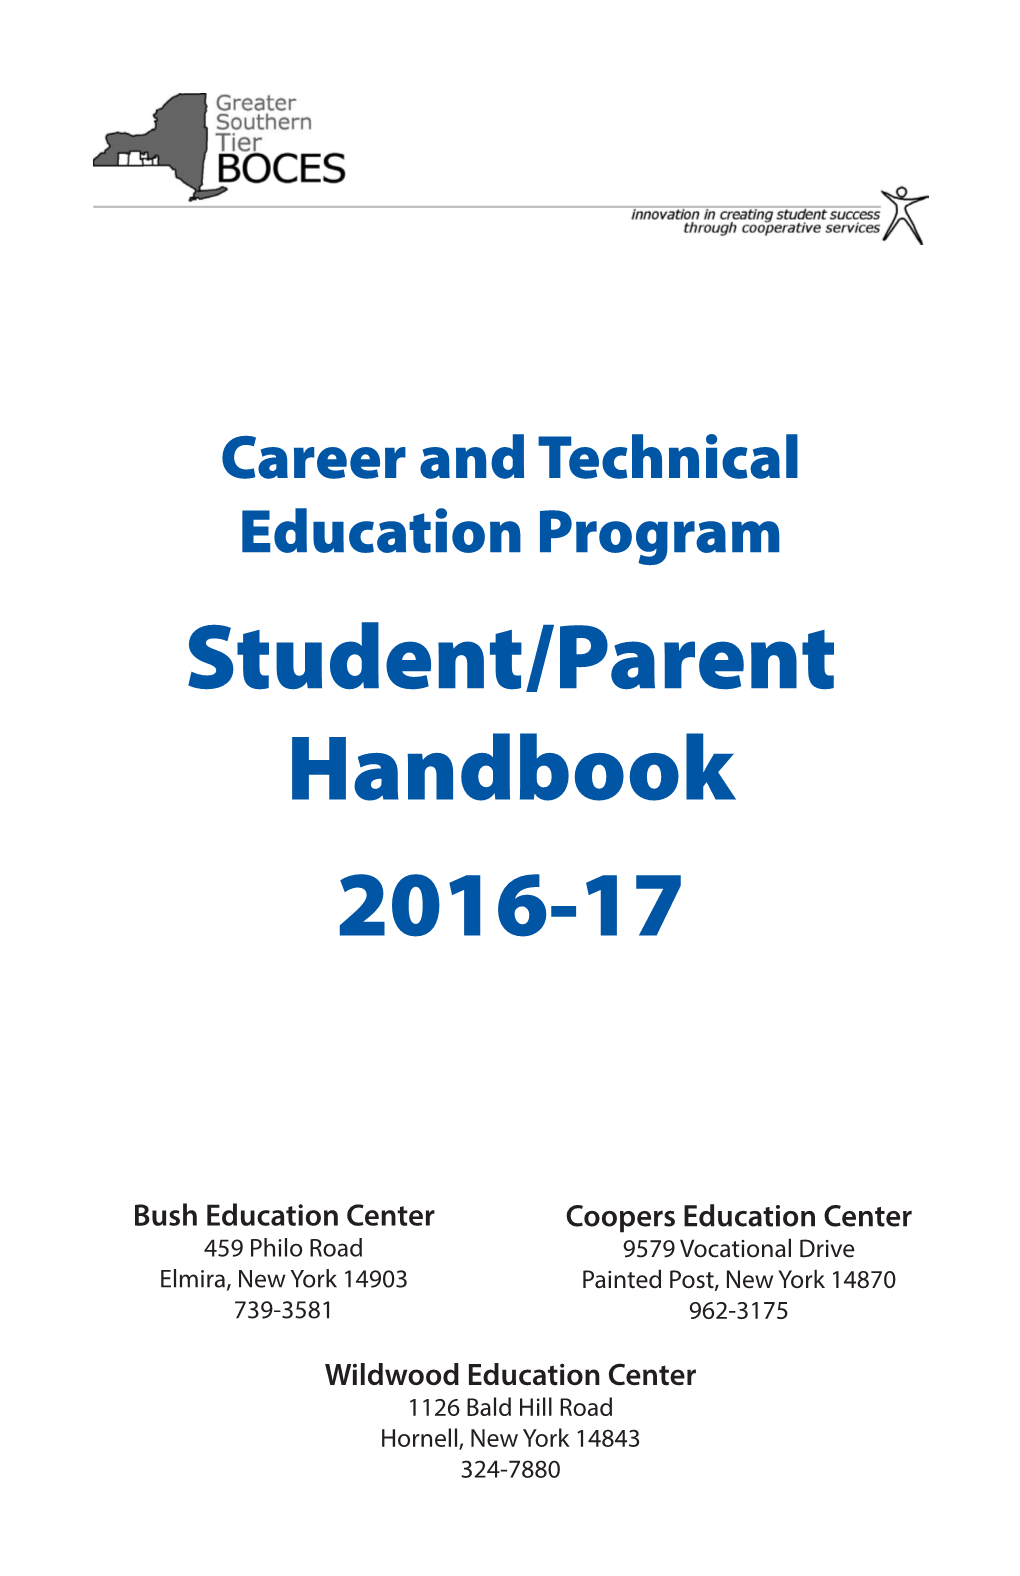 Student/Parent Handbook 2016-17